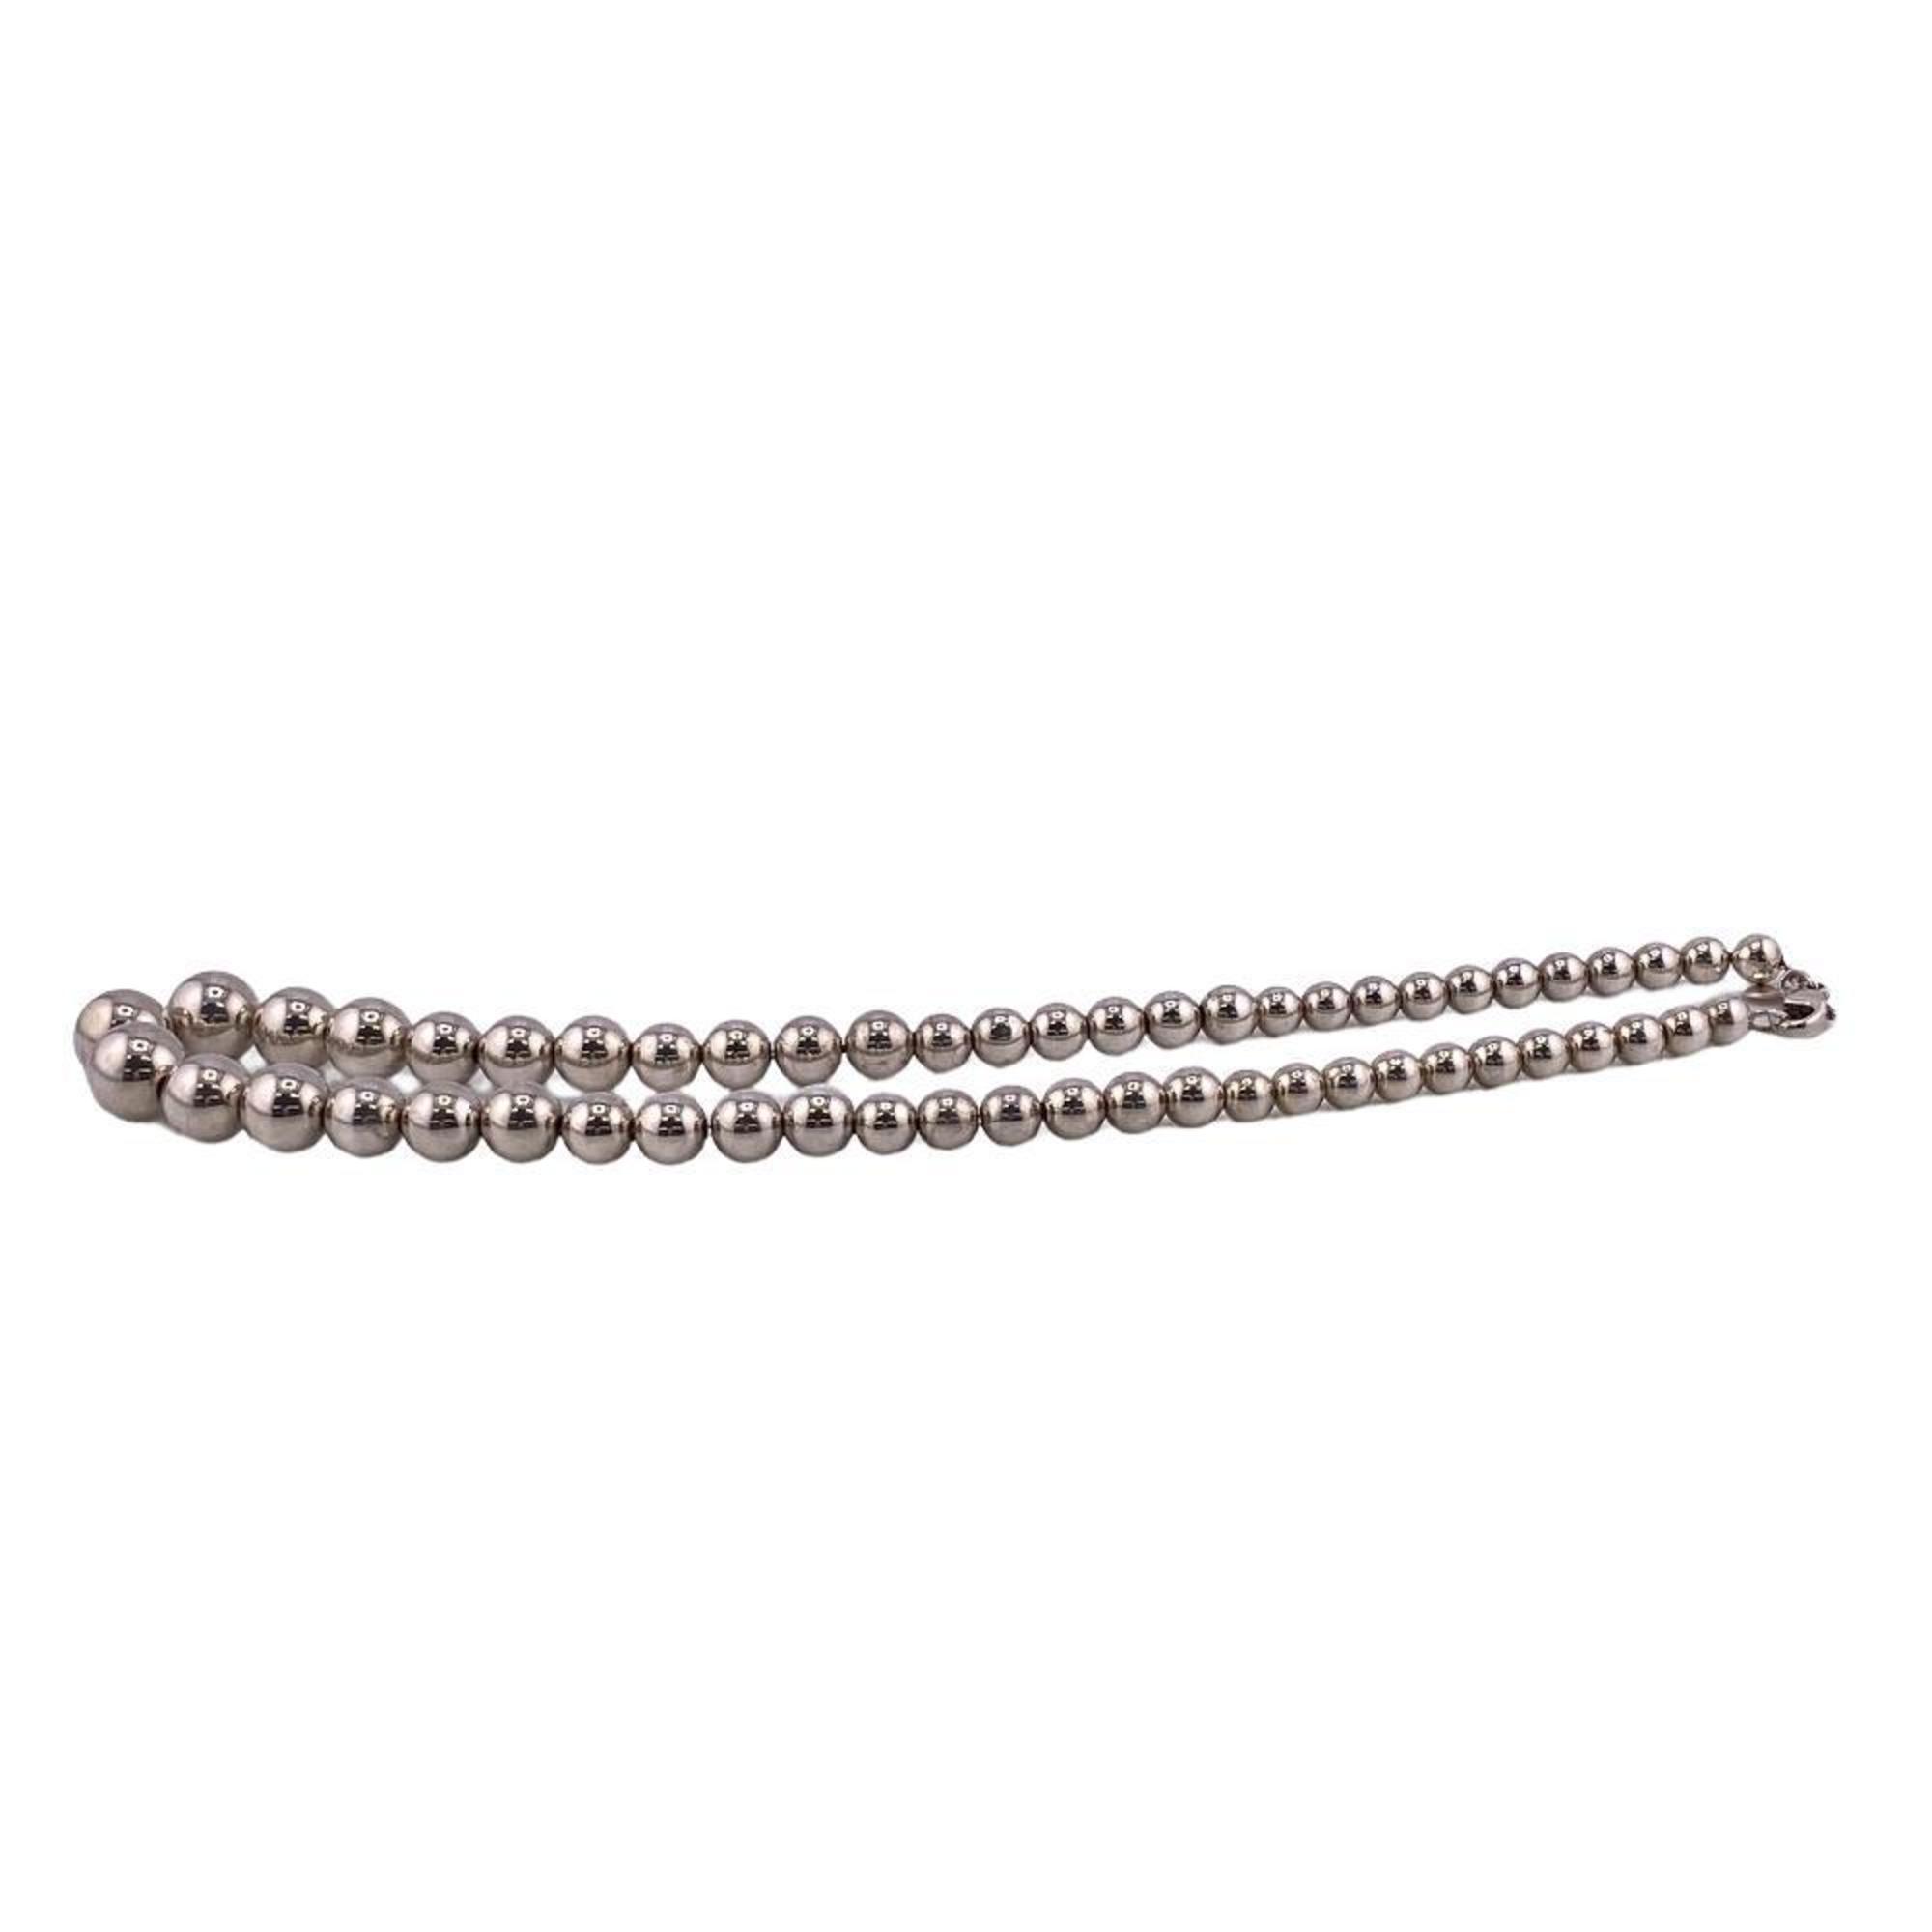 TIFFANY&Co. Tiffany Hardware Ball Necklace 925 28.4g Silver Women's